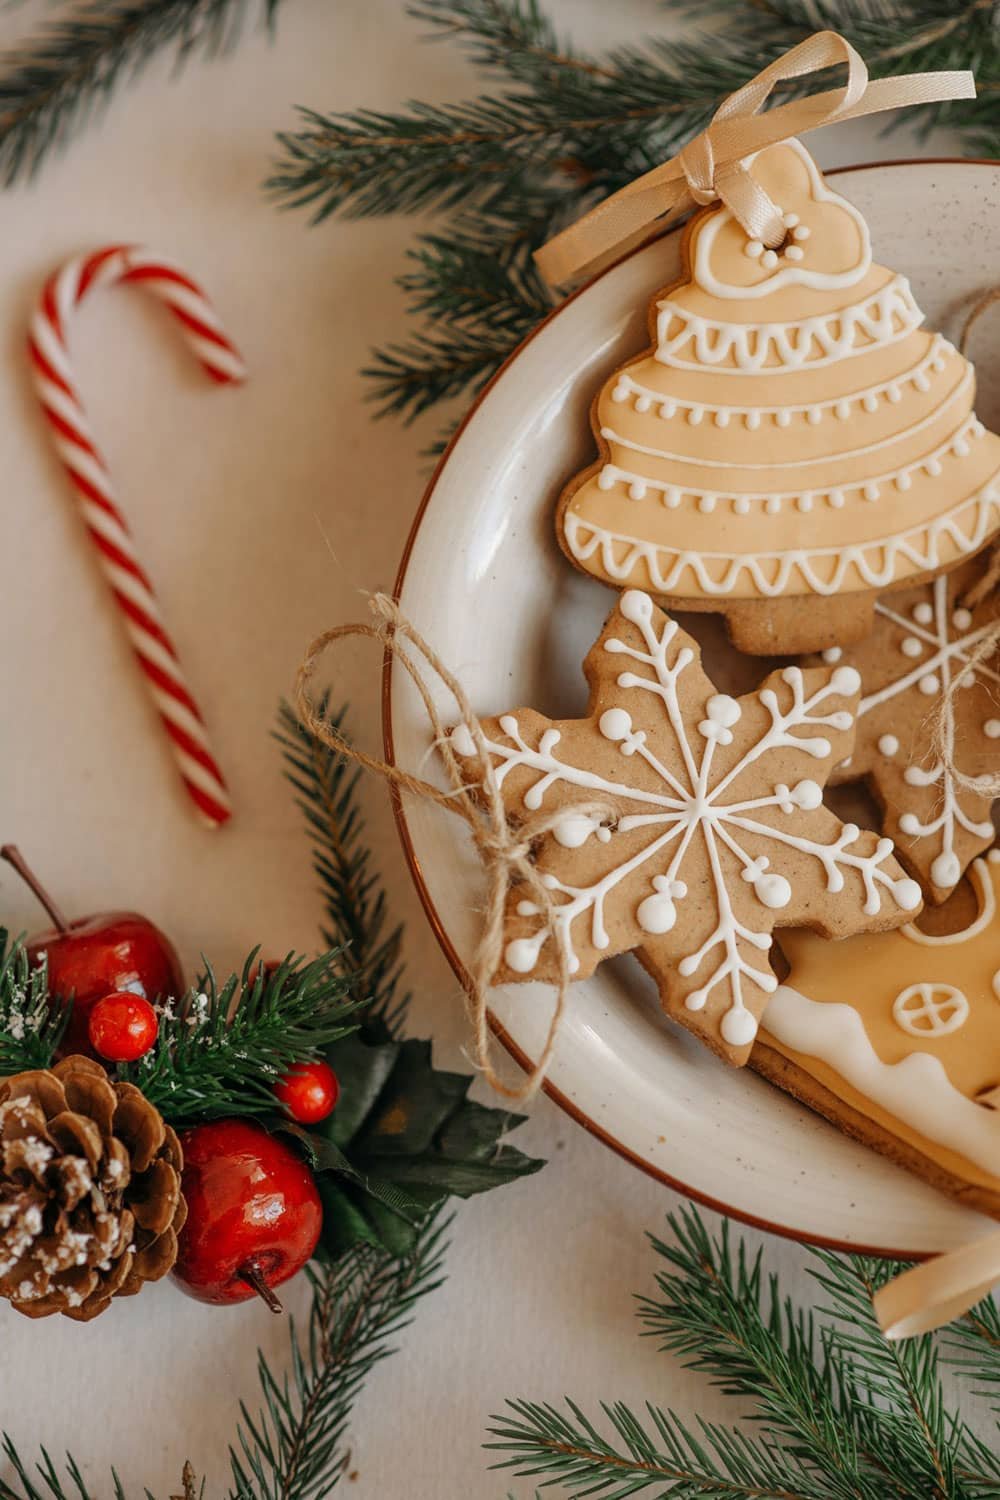 Applesauce Cinnamon Ornaments for Christmas Decor - Recipe Gym